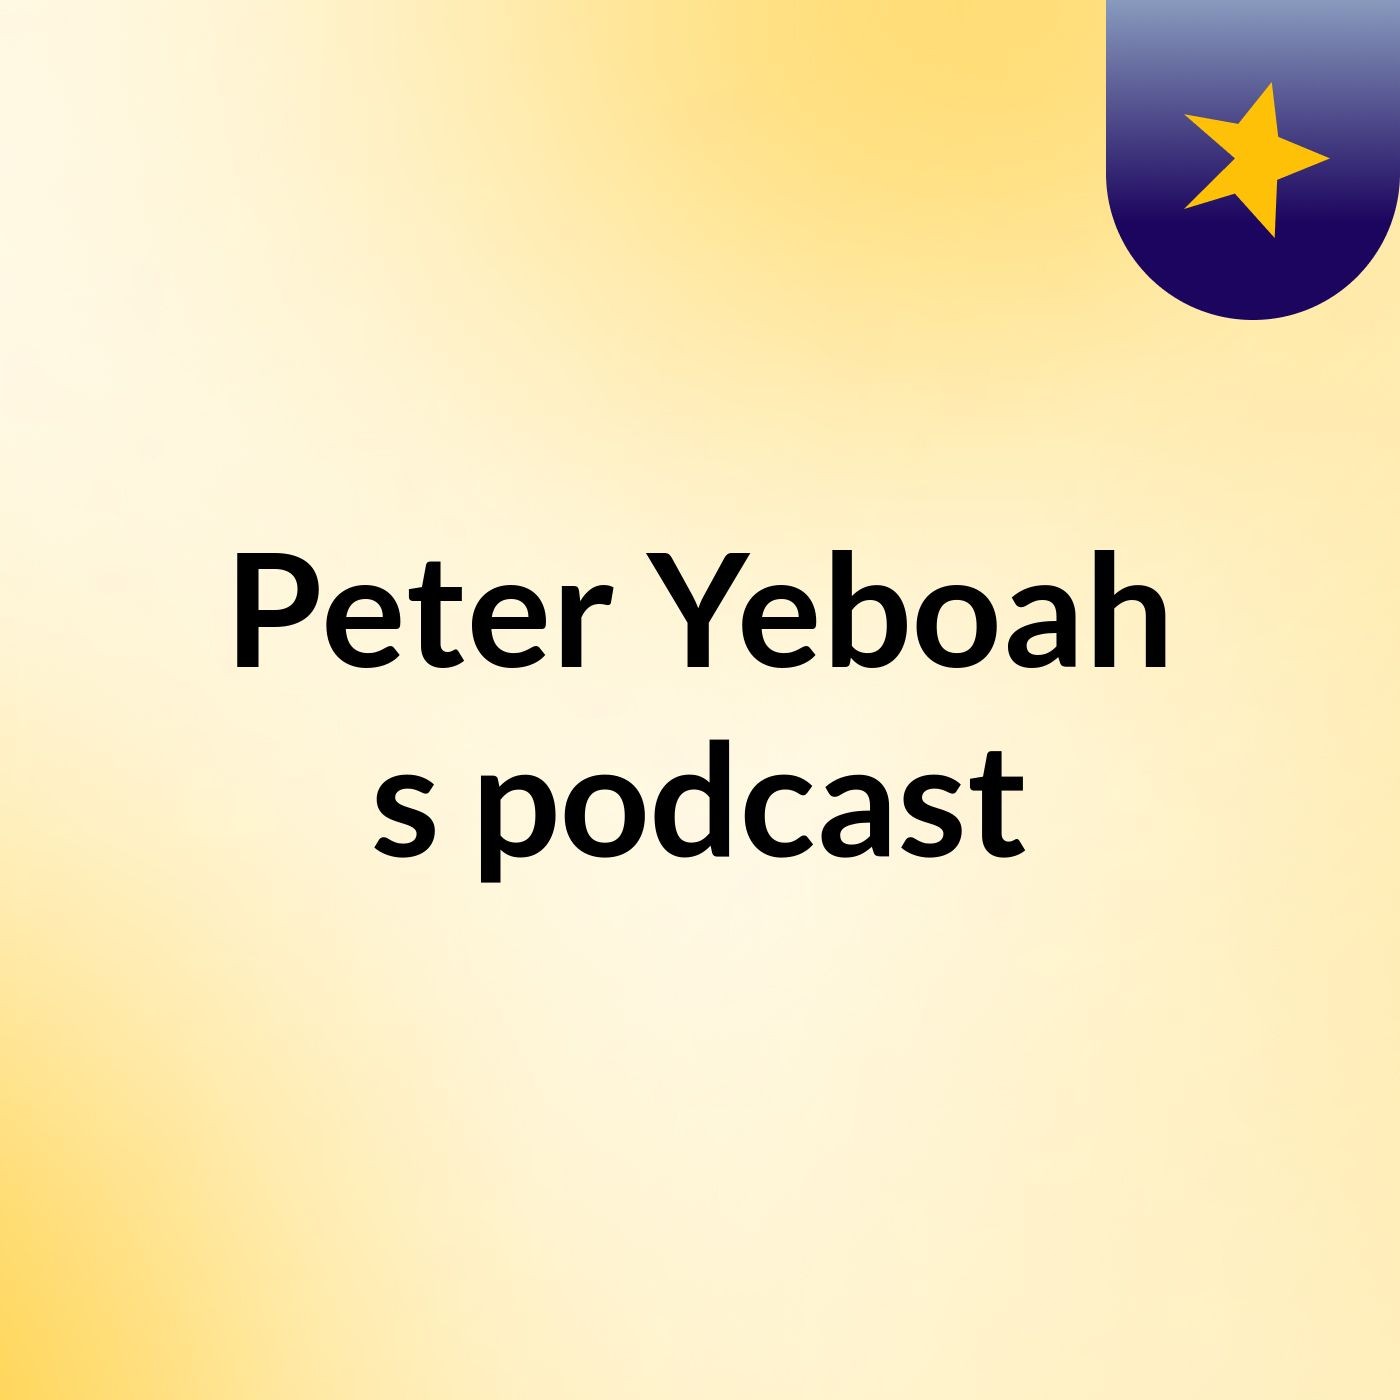 Episode 3 - Peter Yeboah's prodcast